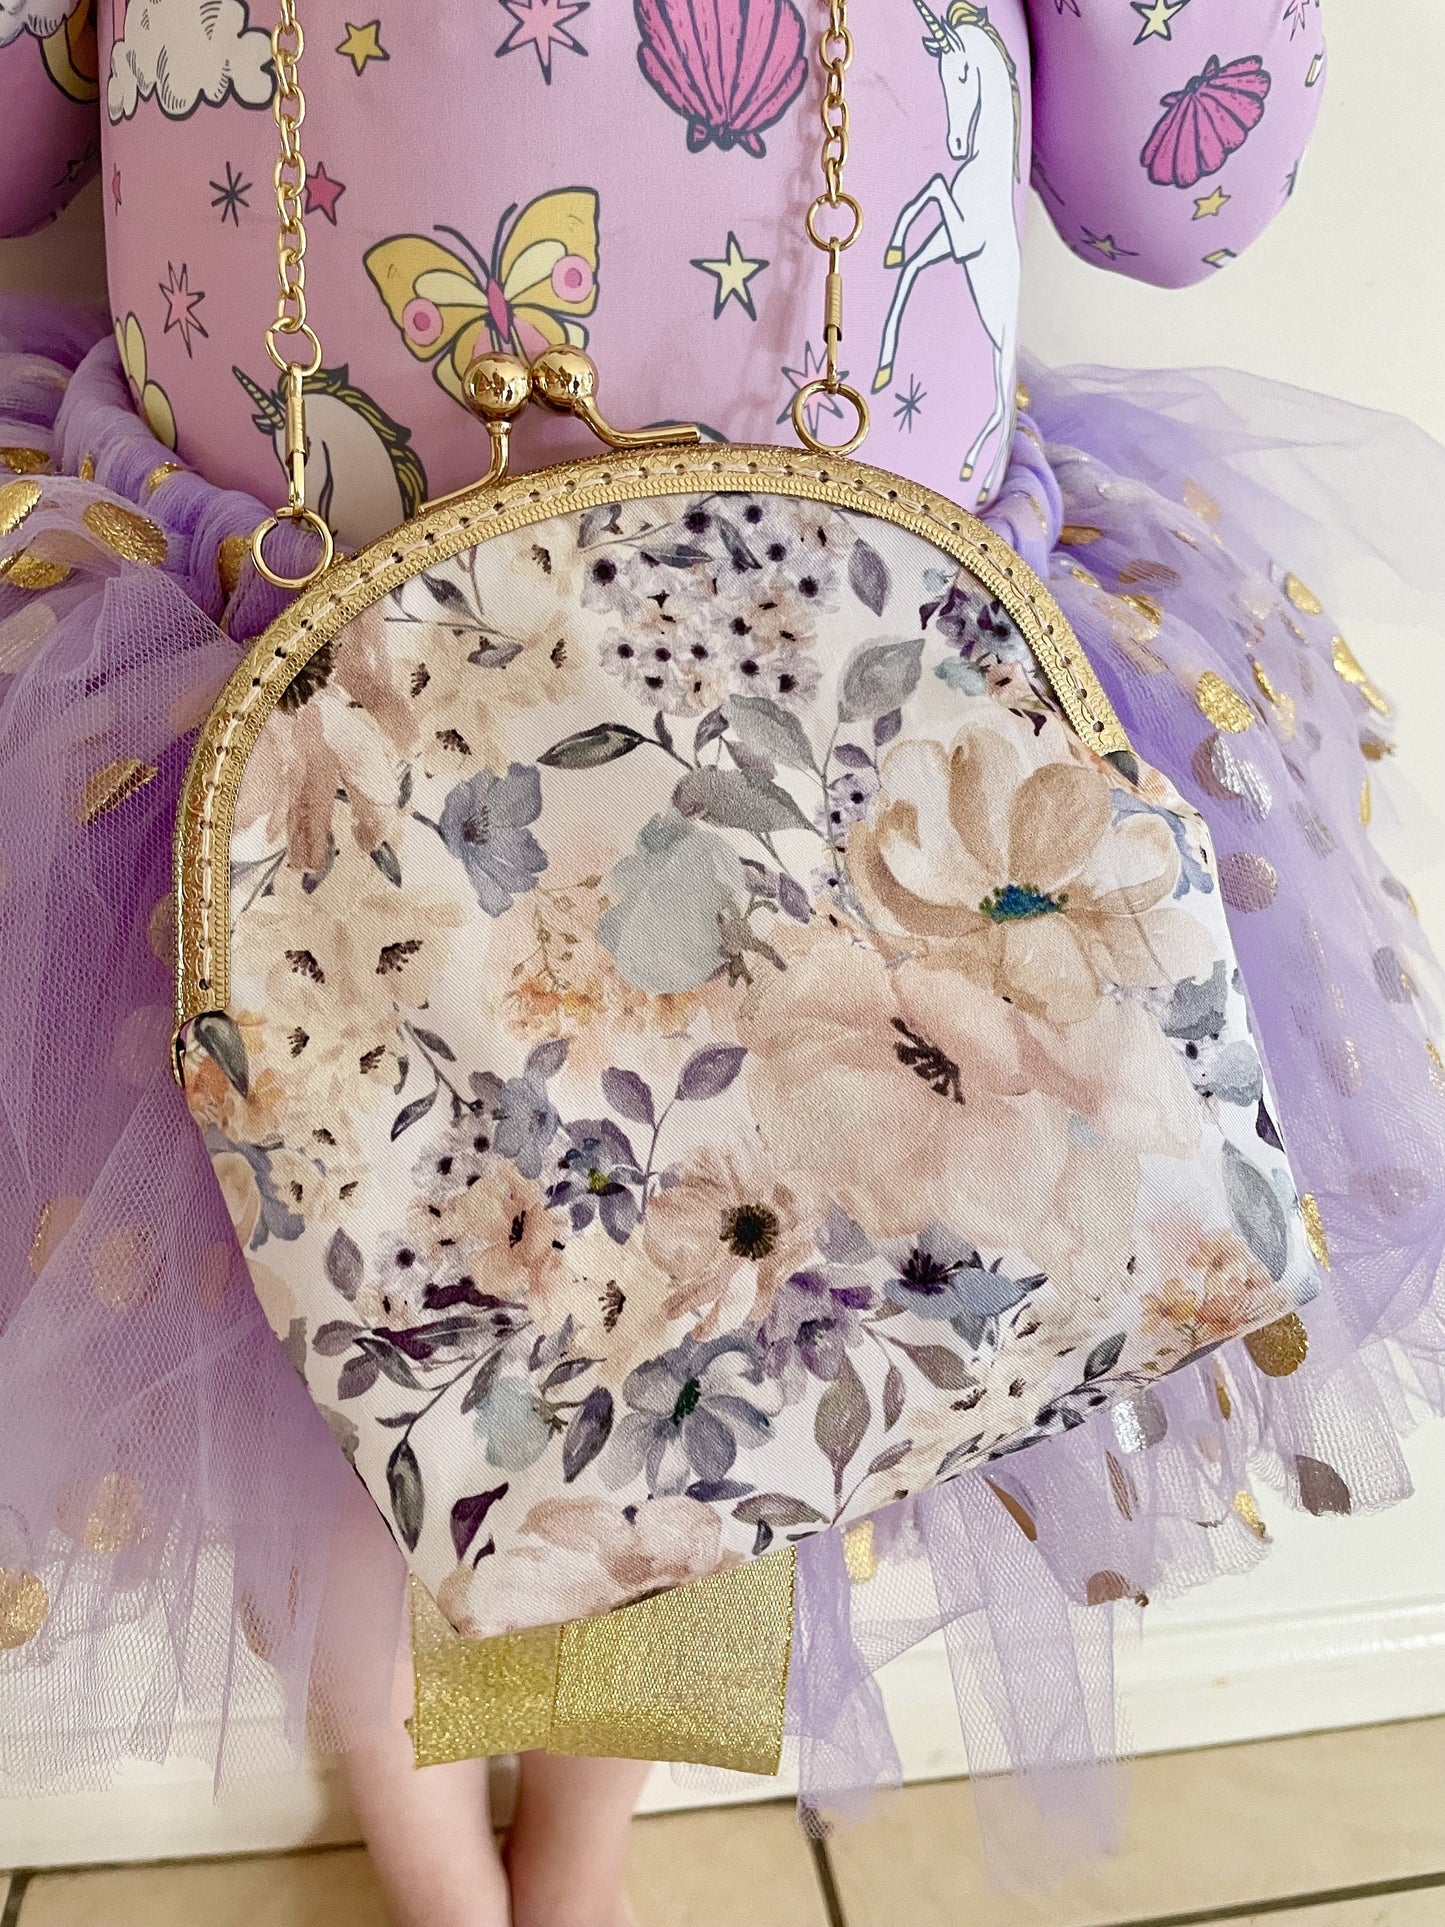 Azalea Floral Purse Handbag